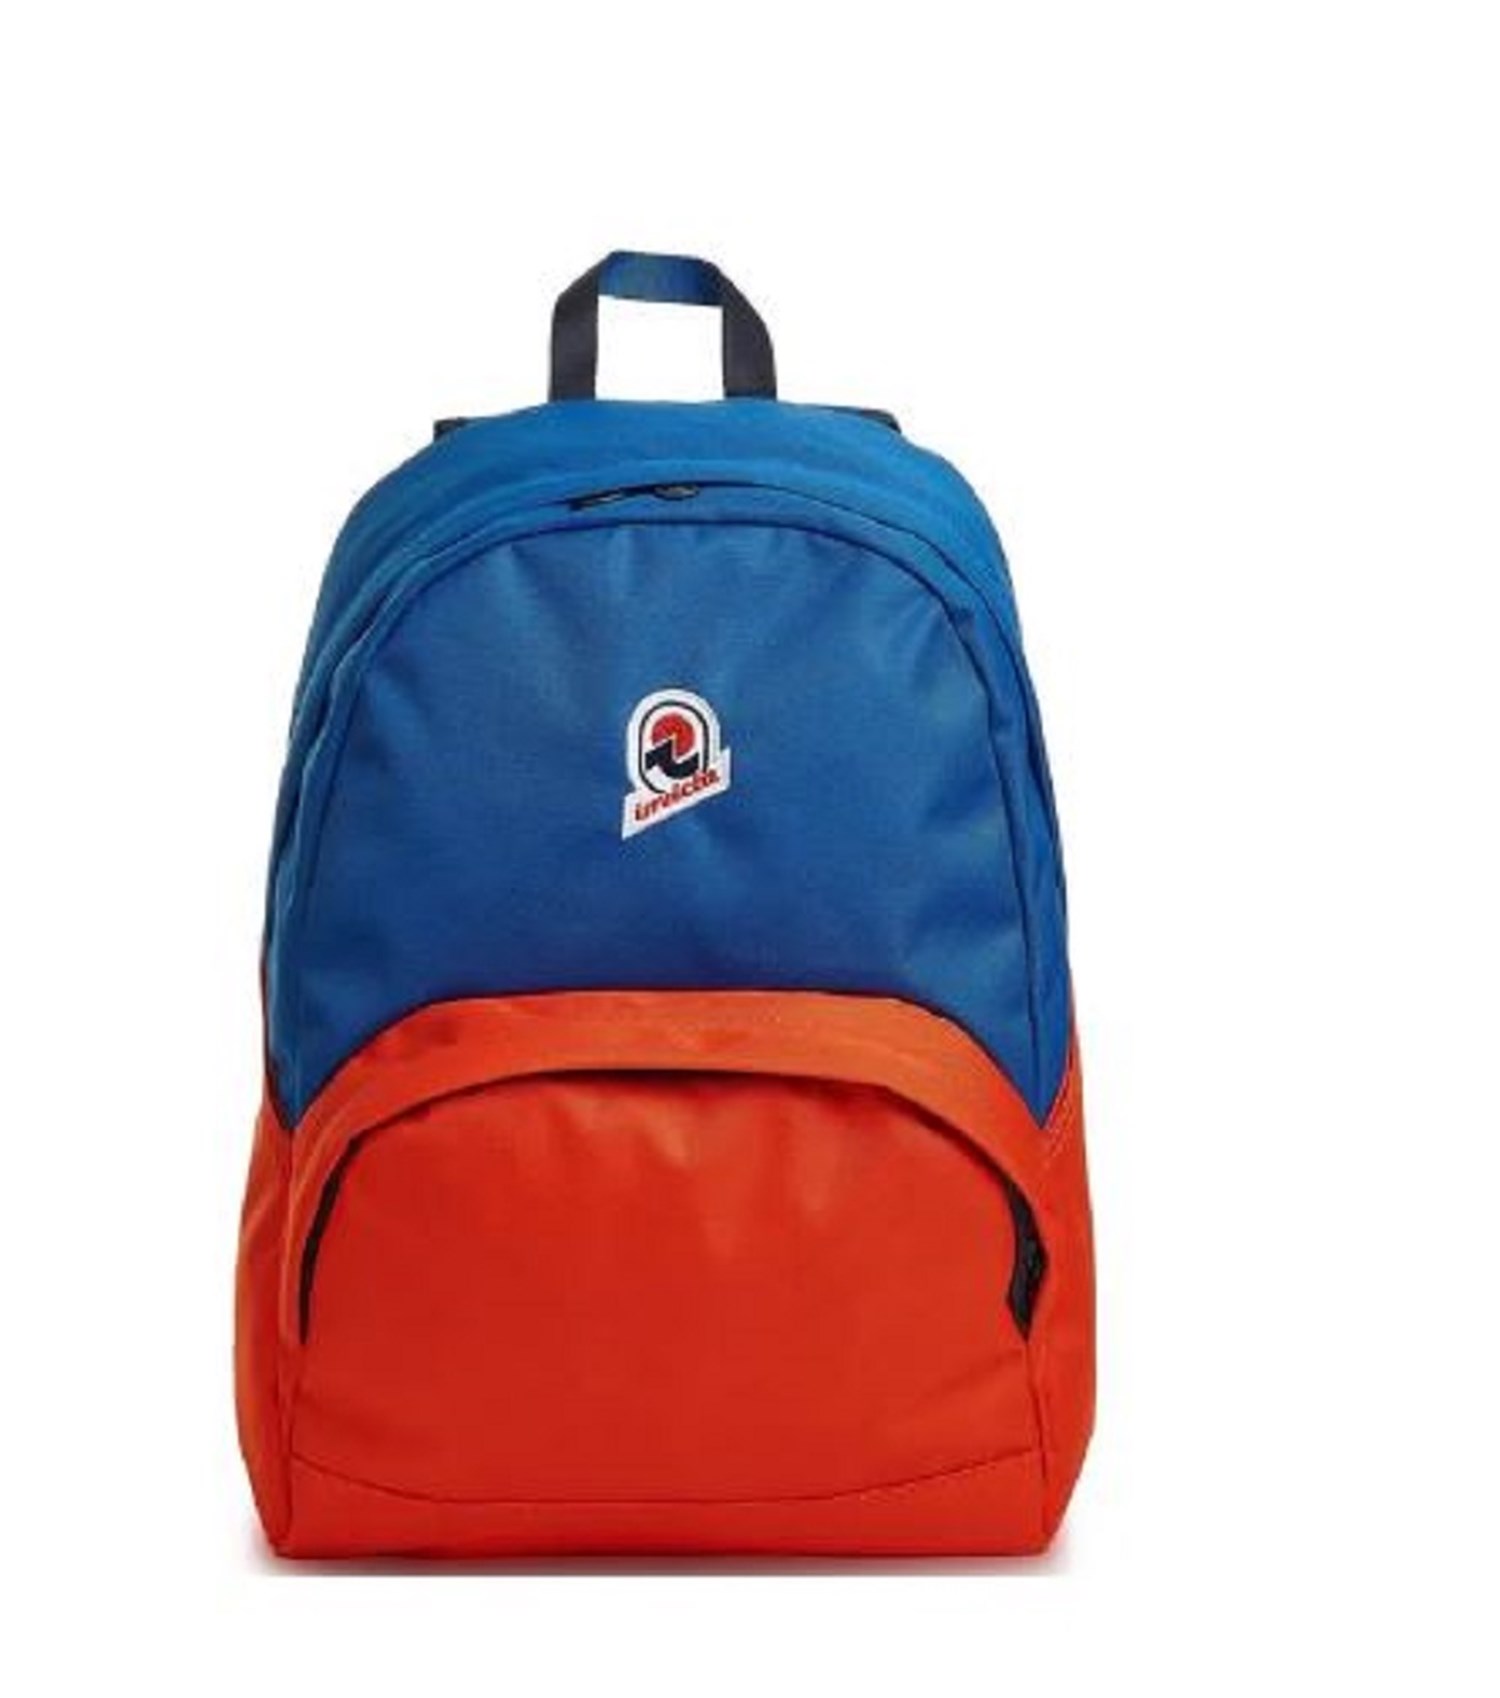 Invicta 206002109BL5 Blue / Orange Bags Man 